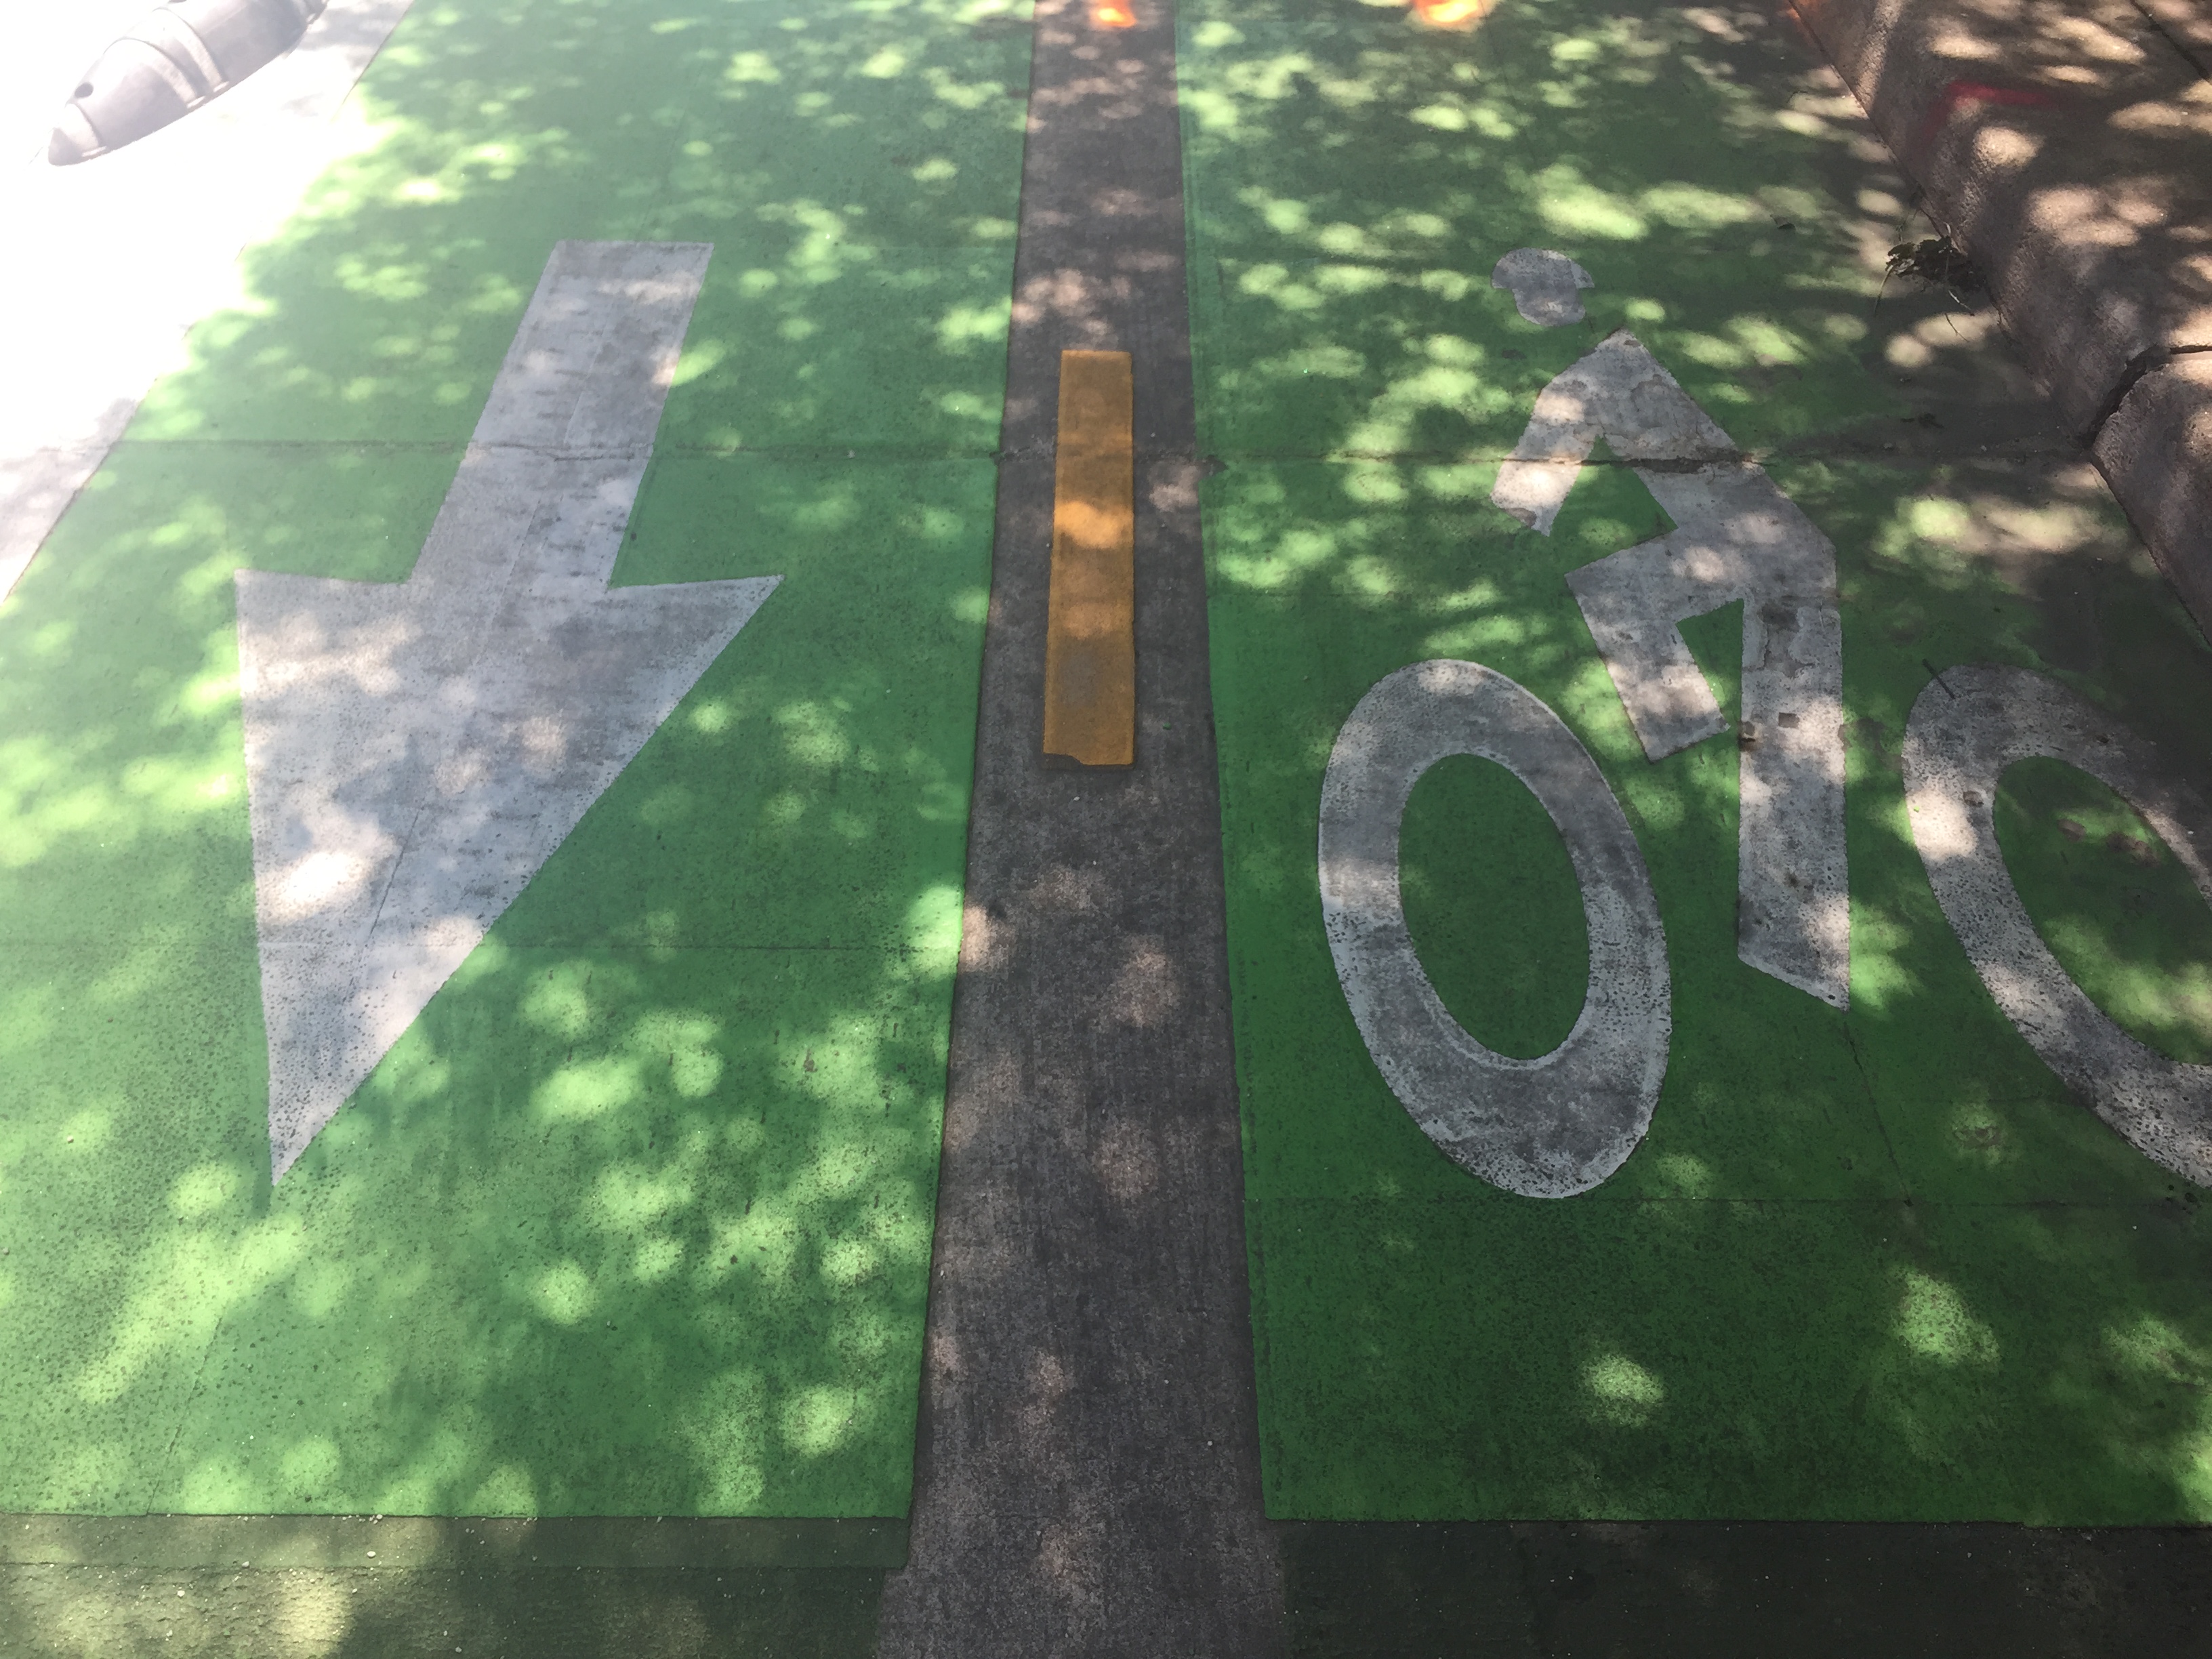 Lamar bike lane markings